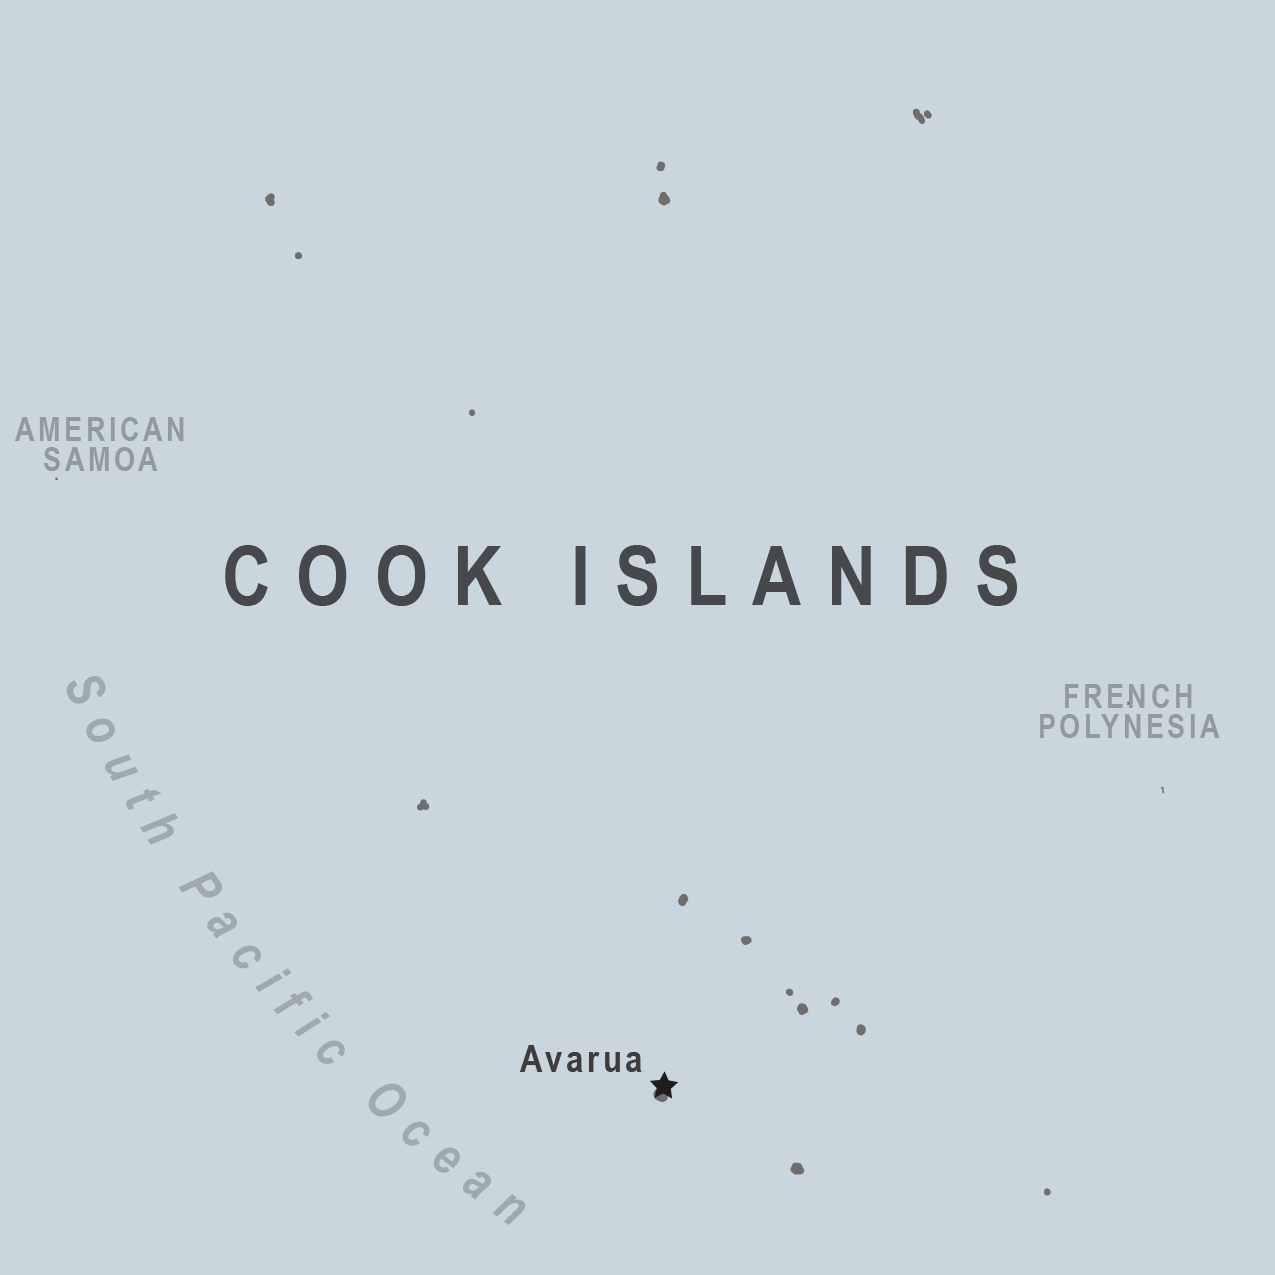 Map - Cook Islands (New Zealand)